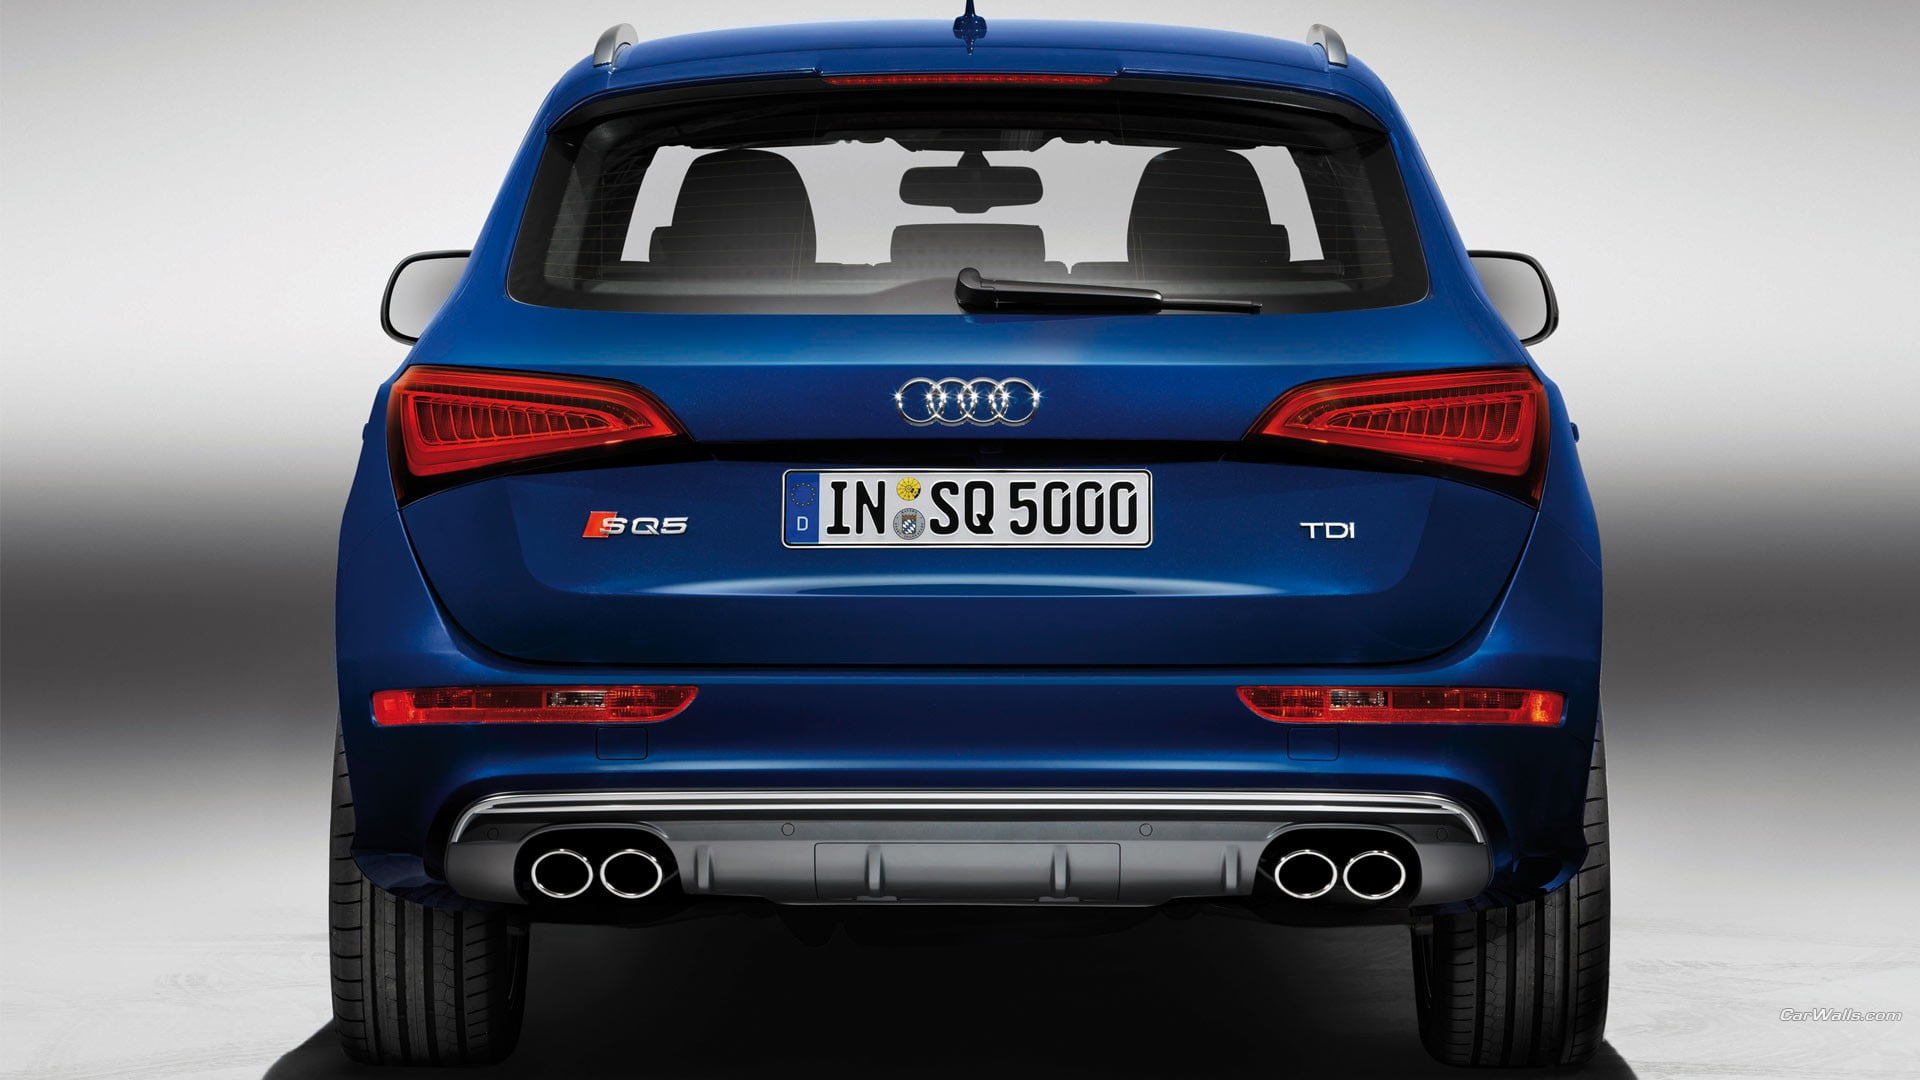 blue Audi SUV, Audi SQ5, car, blue cars, transportation, mode of transportation